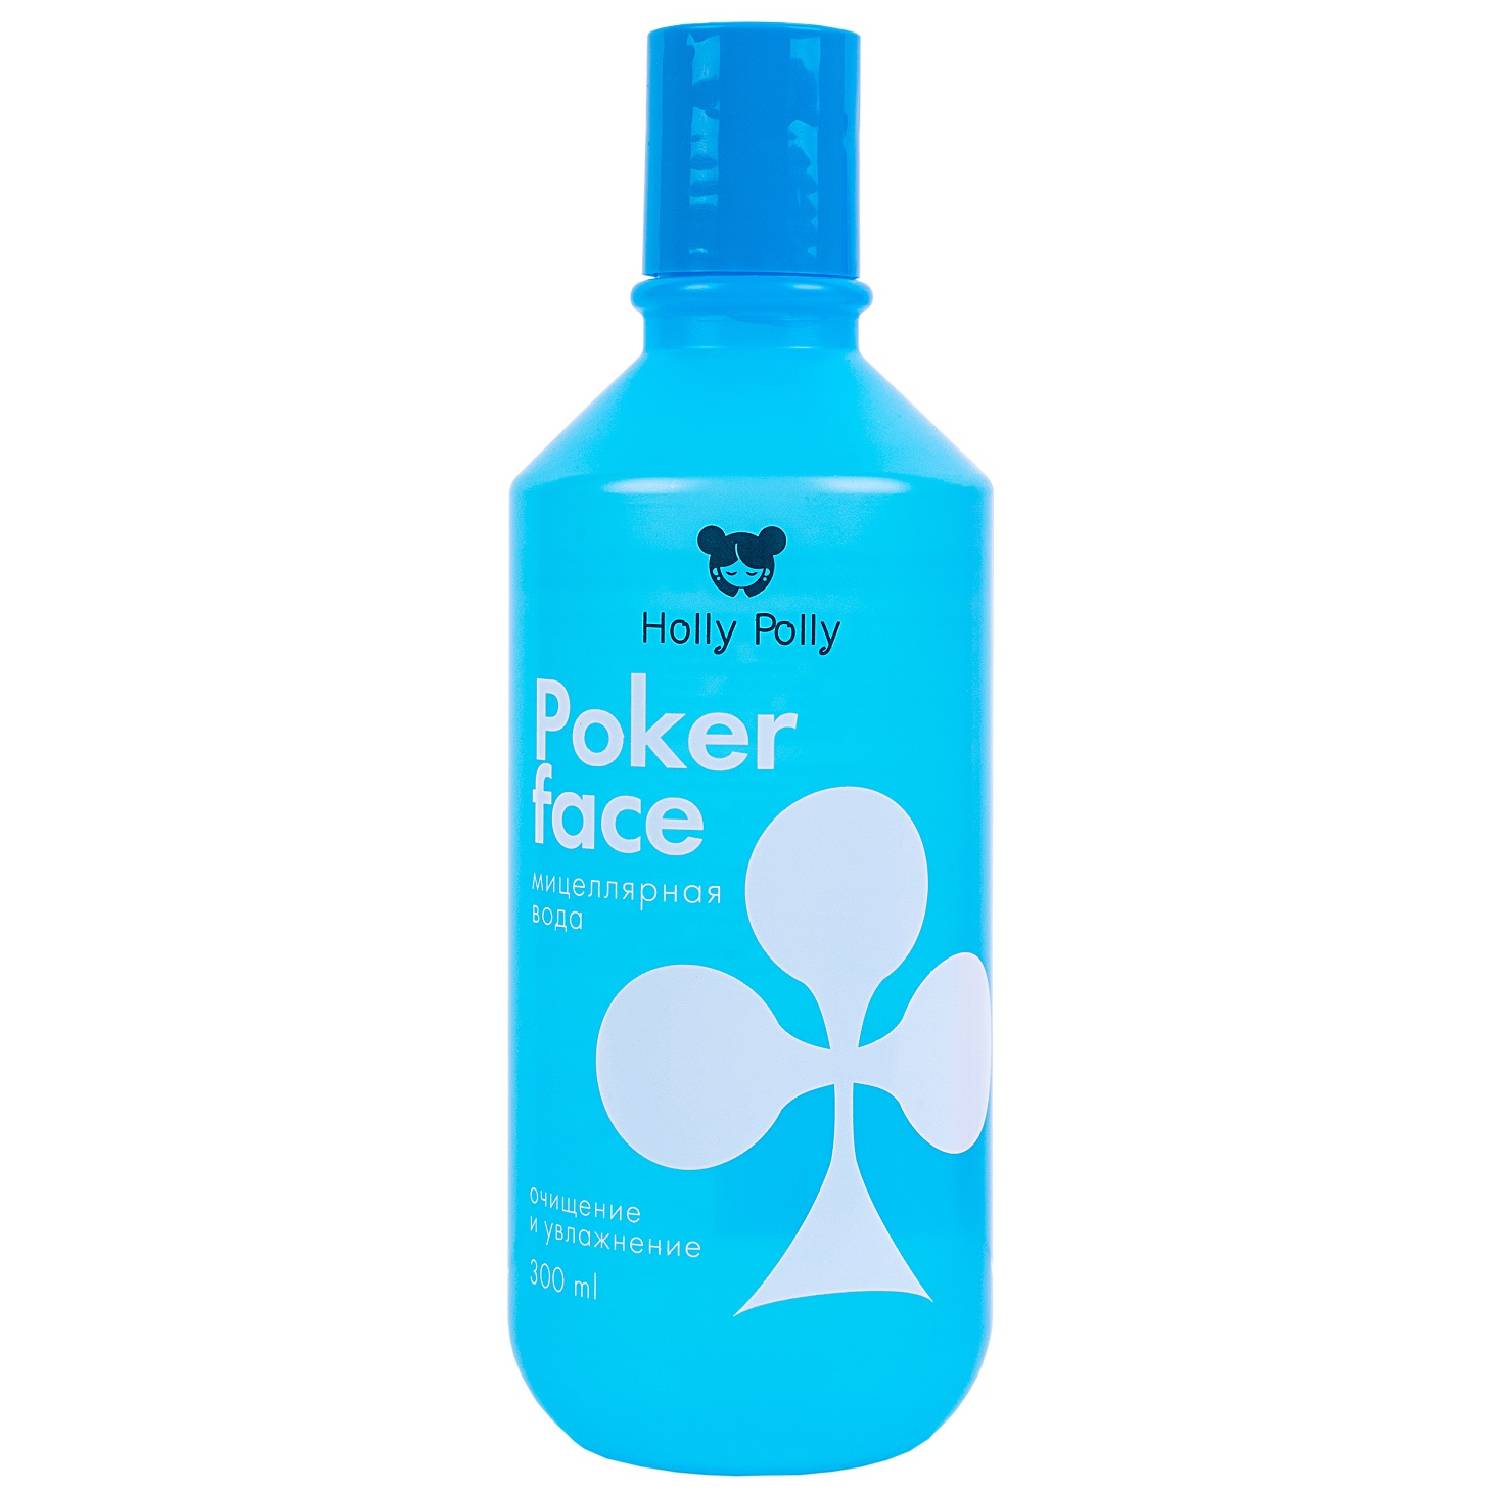 Holly Polly Мицеллярная вода для снятия макияжа «Очищение и увлажнение», 300 мл (Holly Polly, Poker Face)